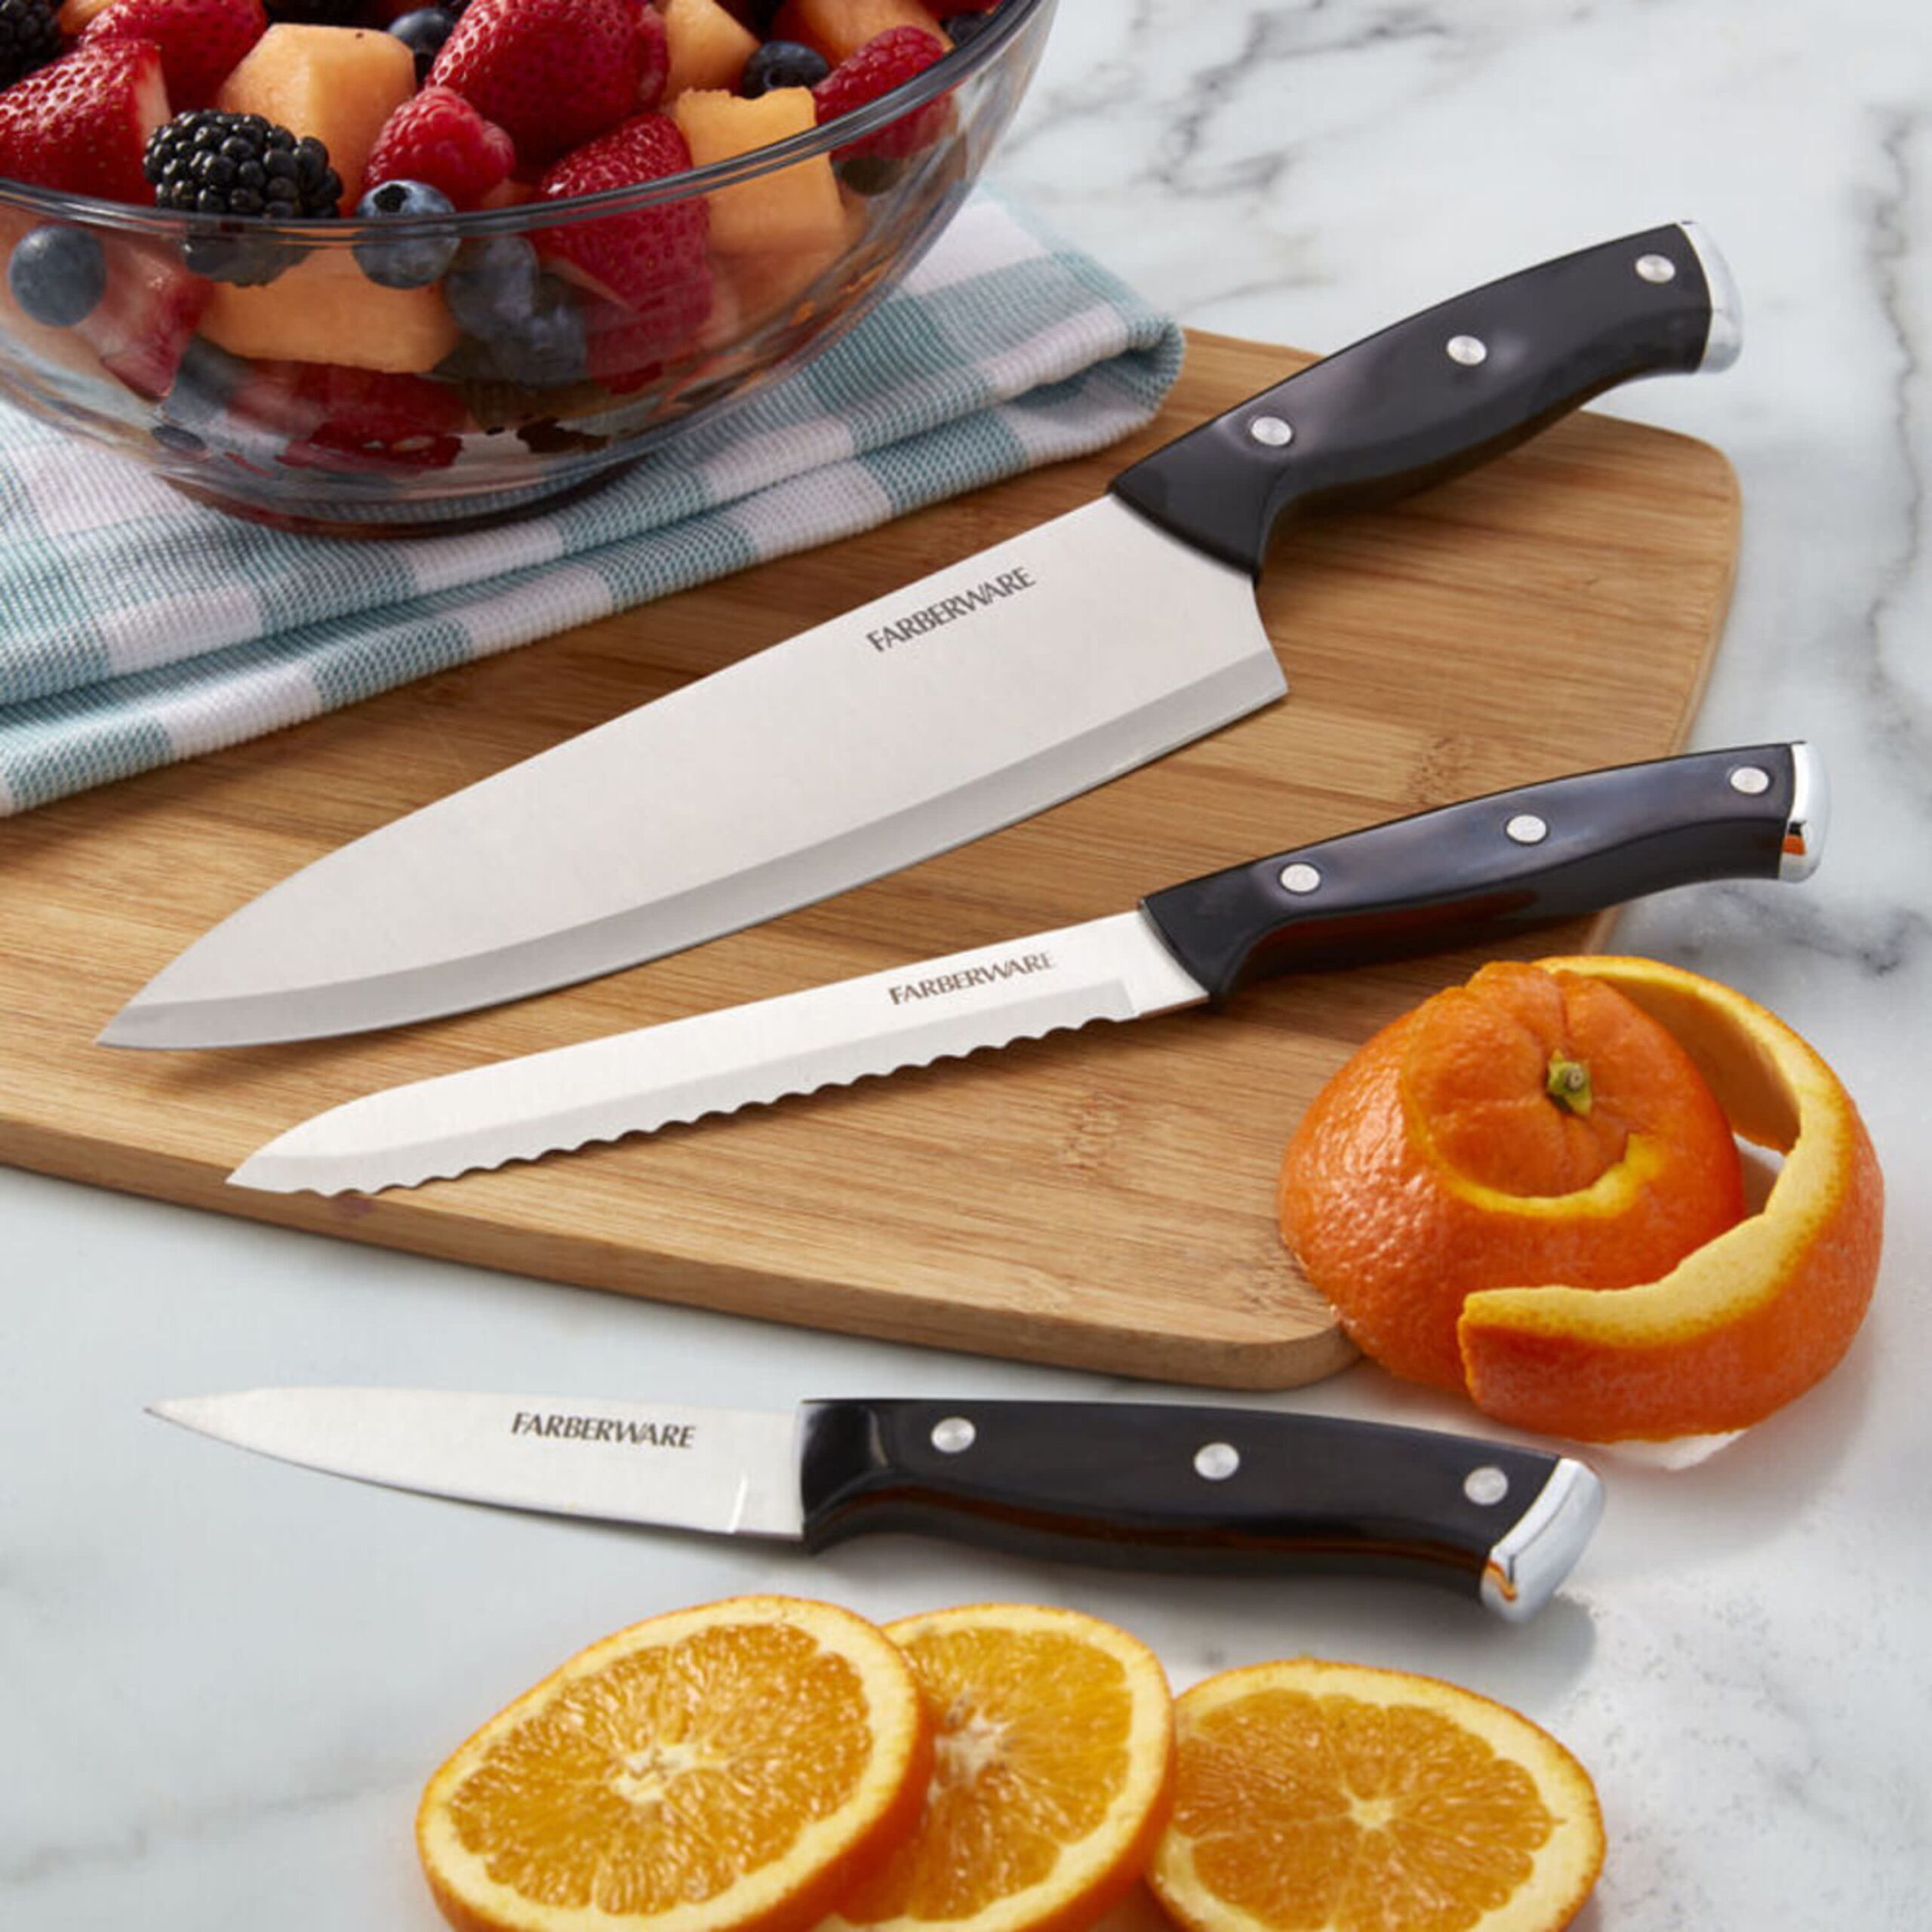 Farberware Paring Knives Set